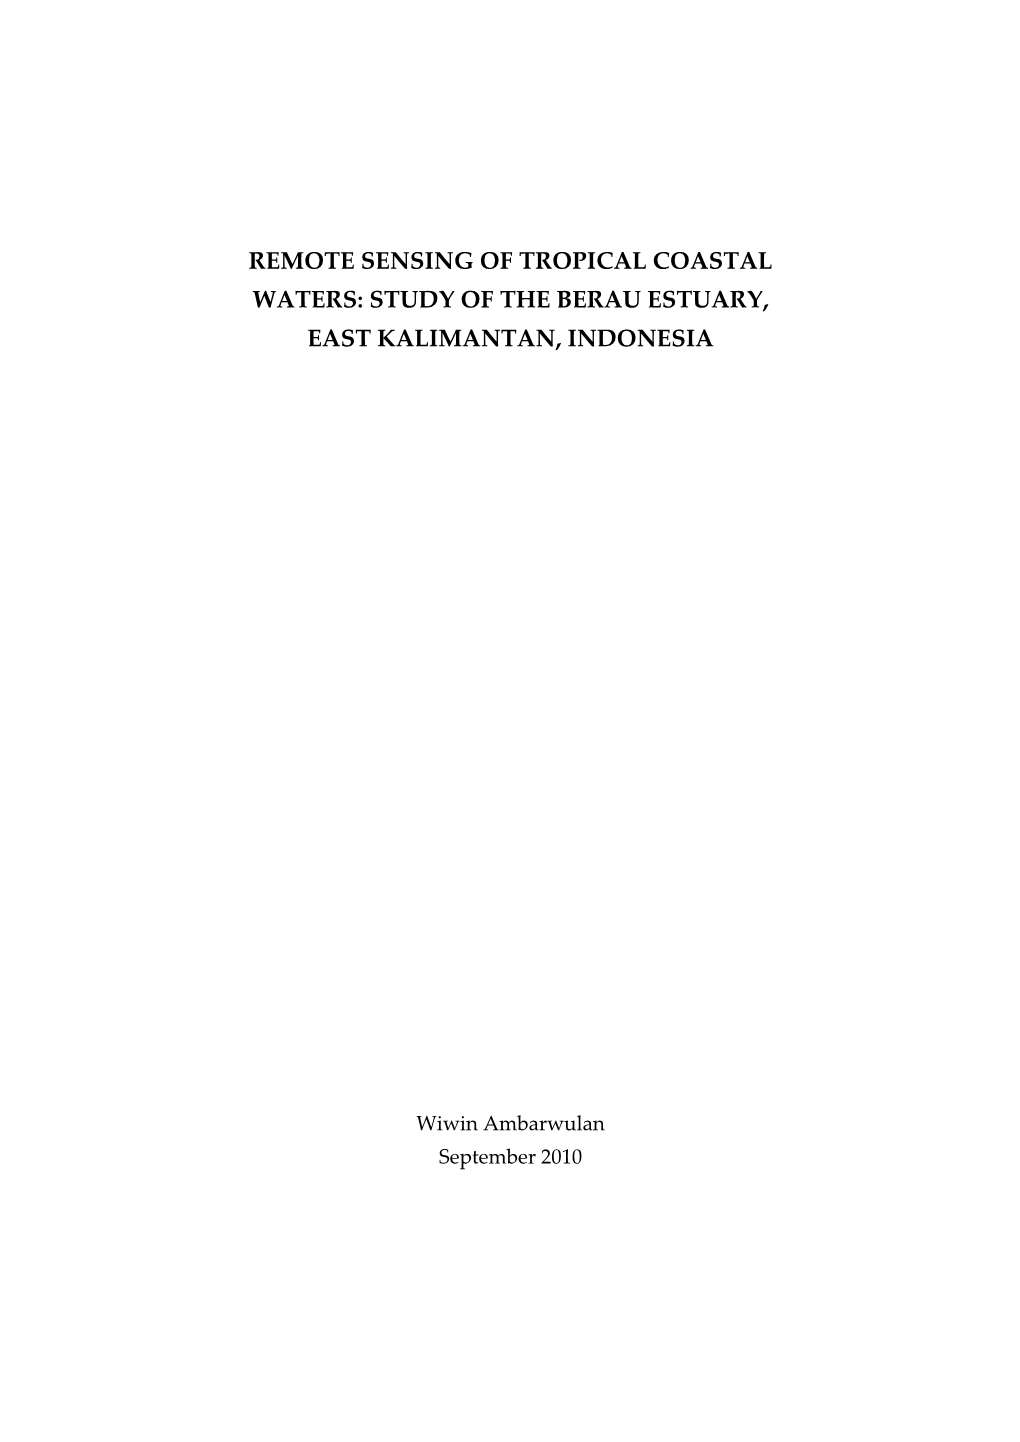 Remote Sensing of Tropical Coastal Waters: Study of the Berau Estuary, East Kalimantan, Indonesia